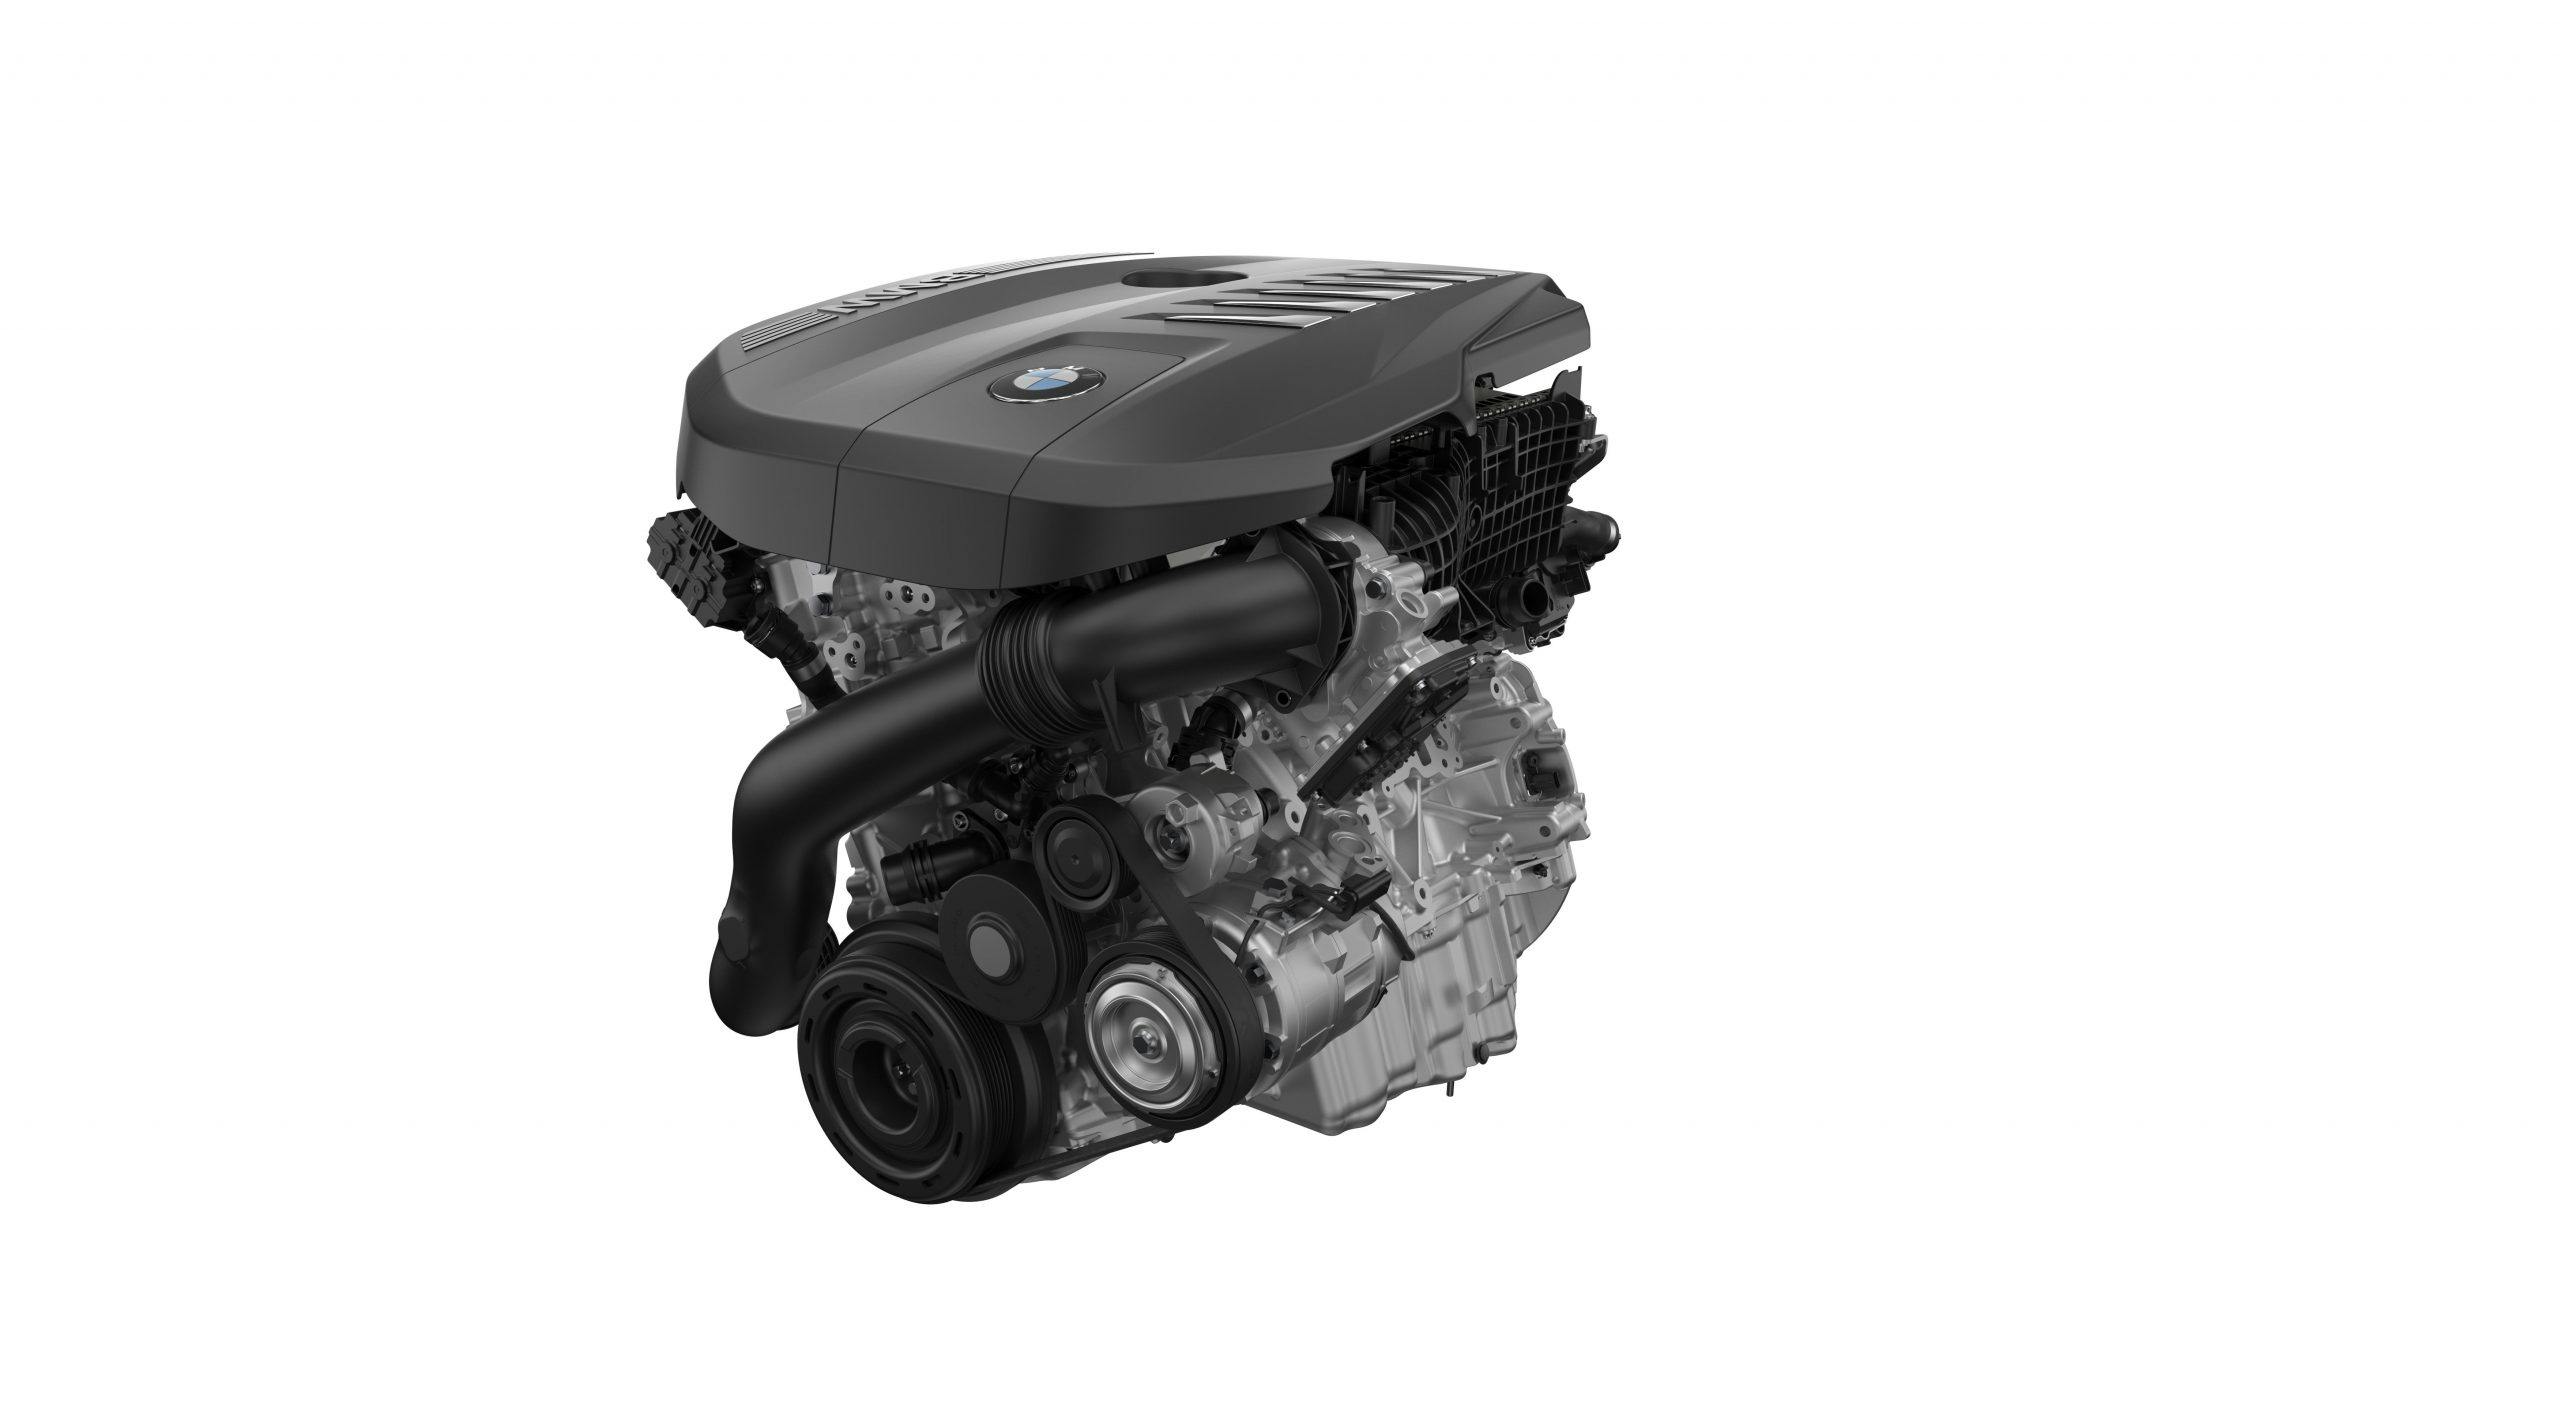 BMW 7-Series engine six-cylinder